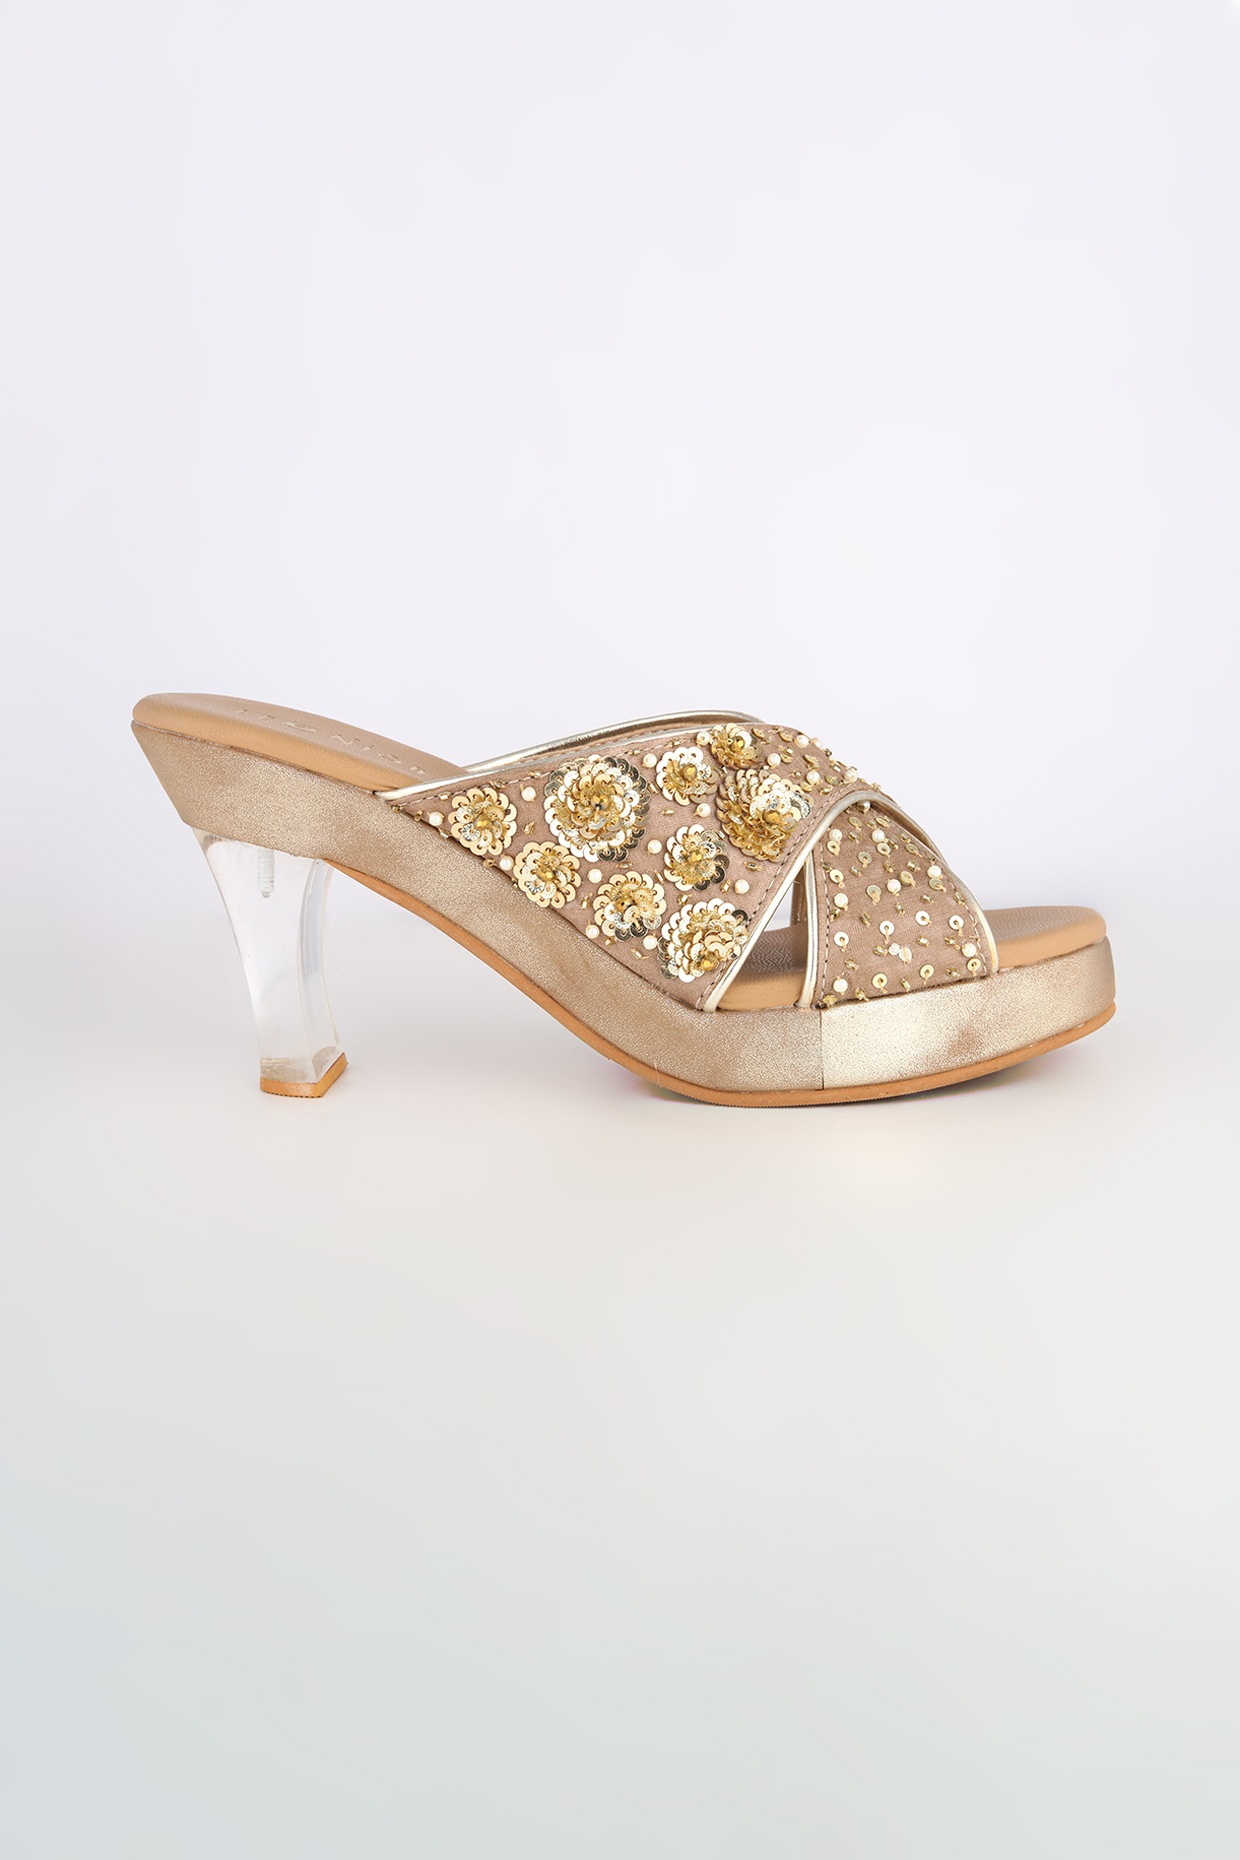 Are clear heels ok for weddings ? : r/Weddingattireapproval